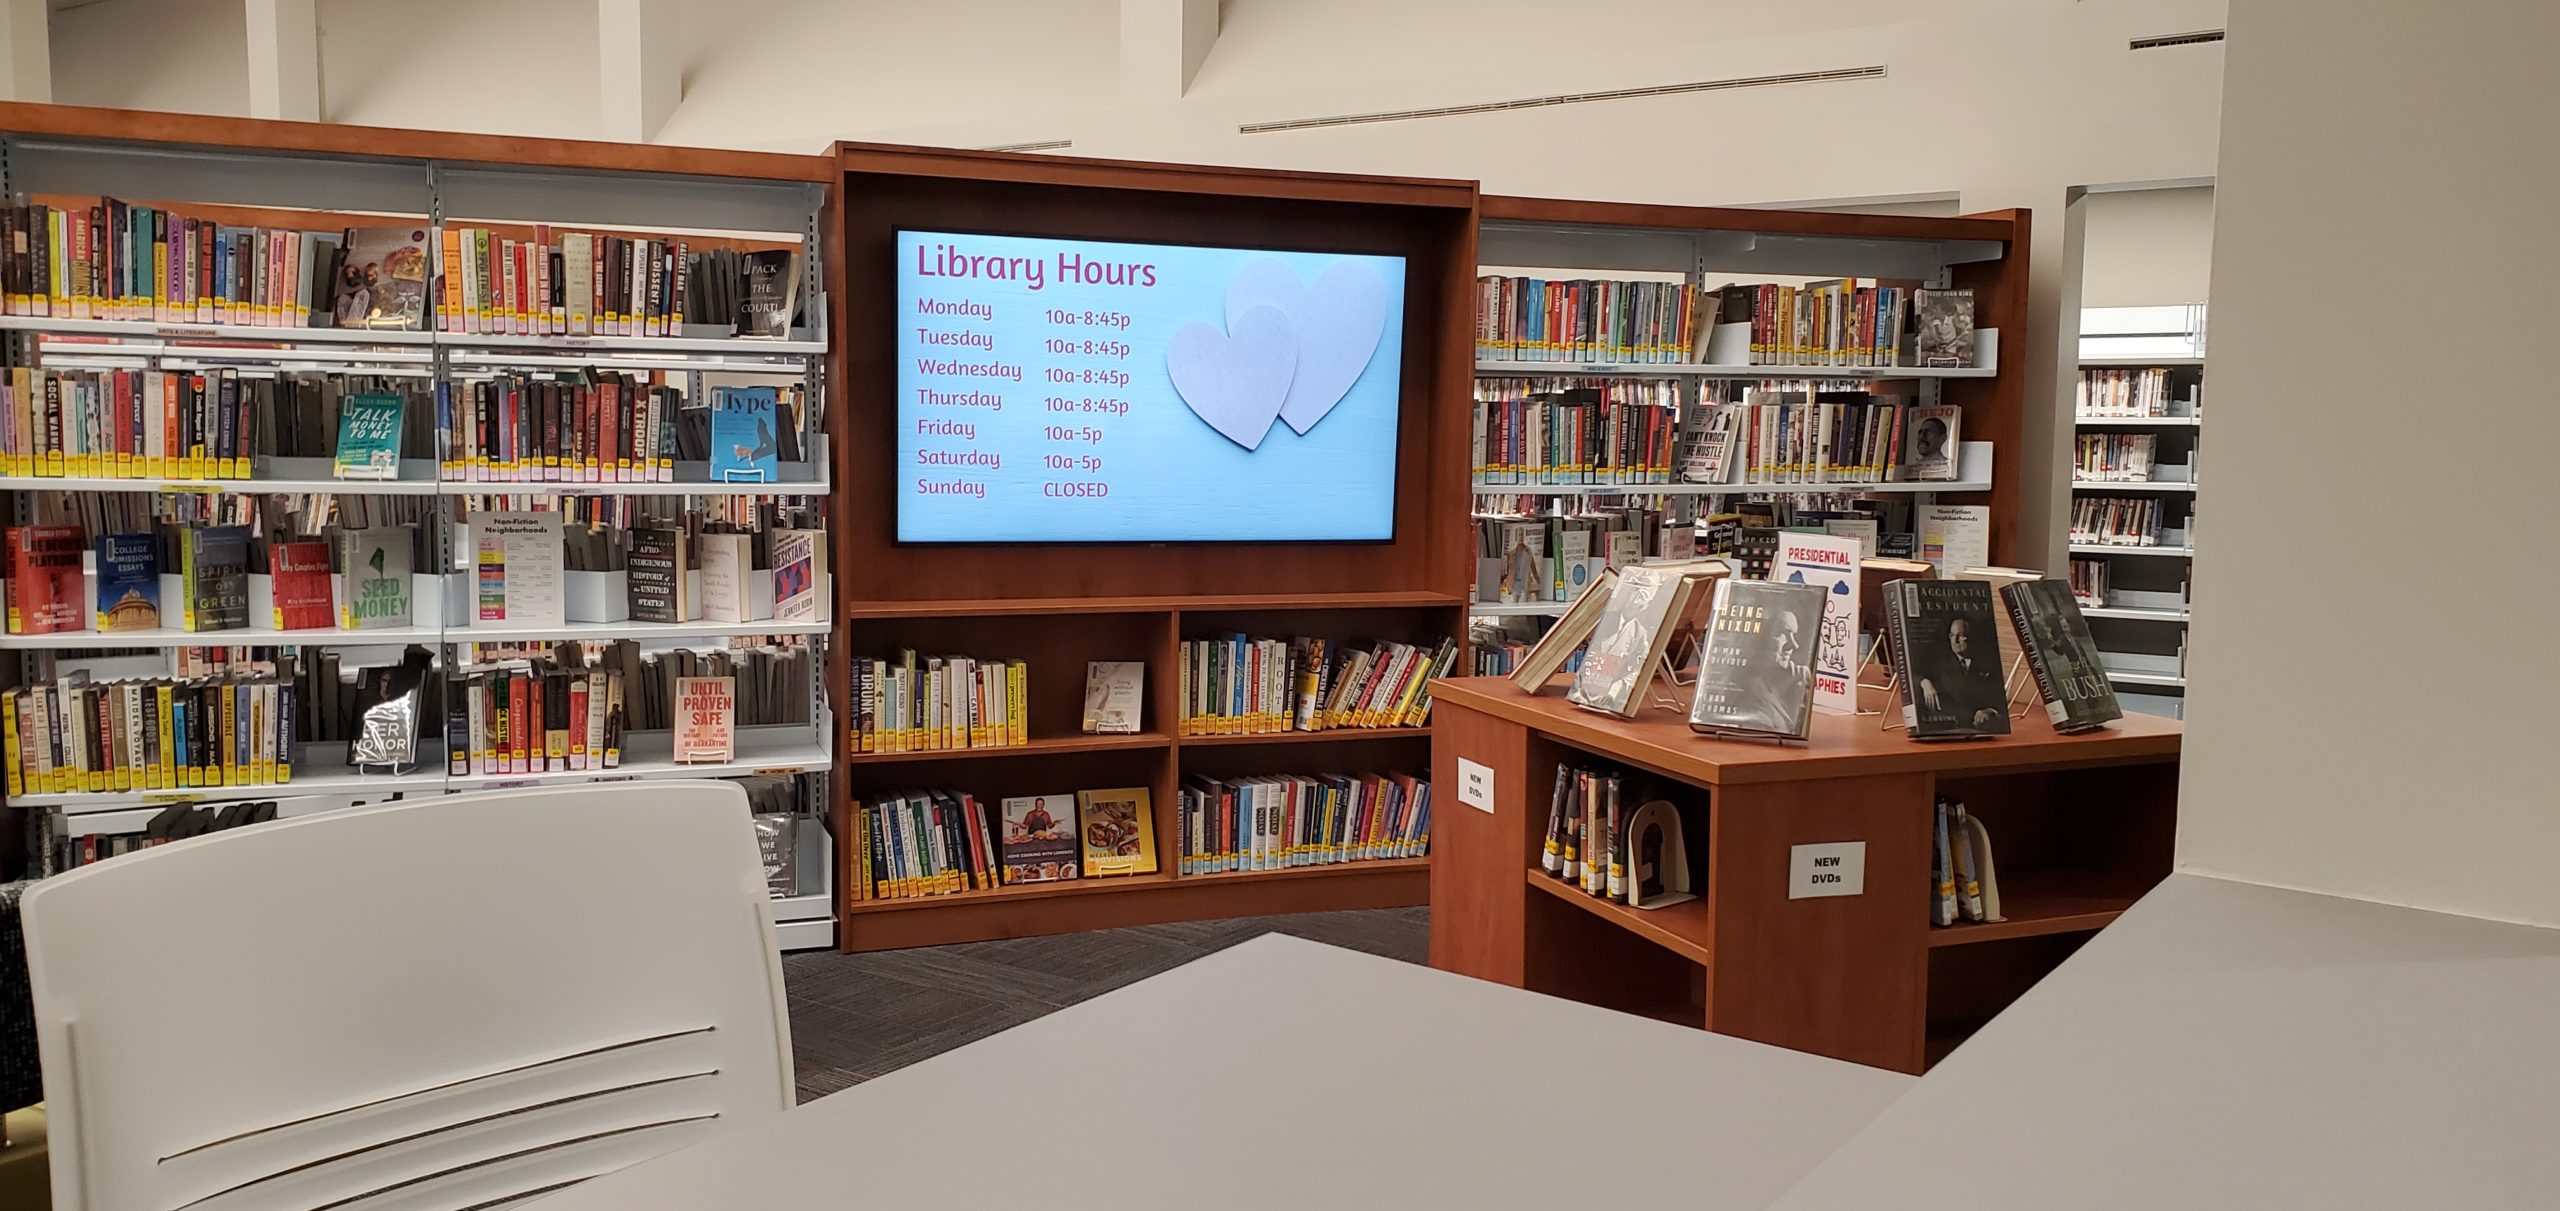 upper dublin public library digital signage hours